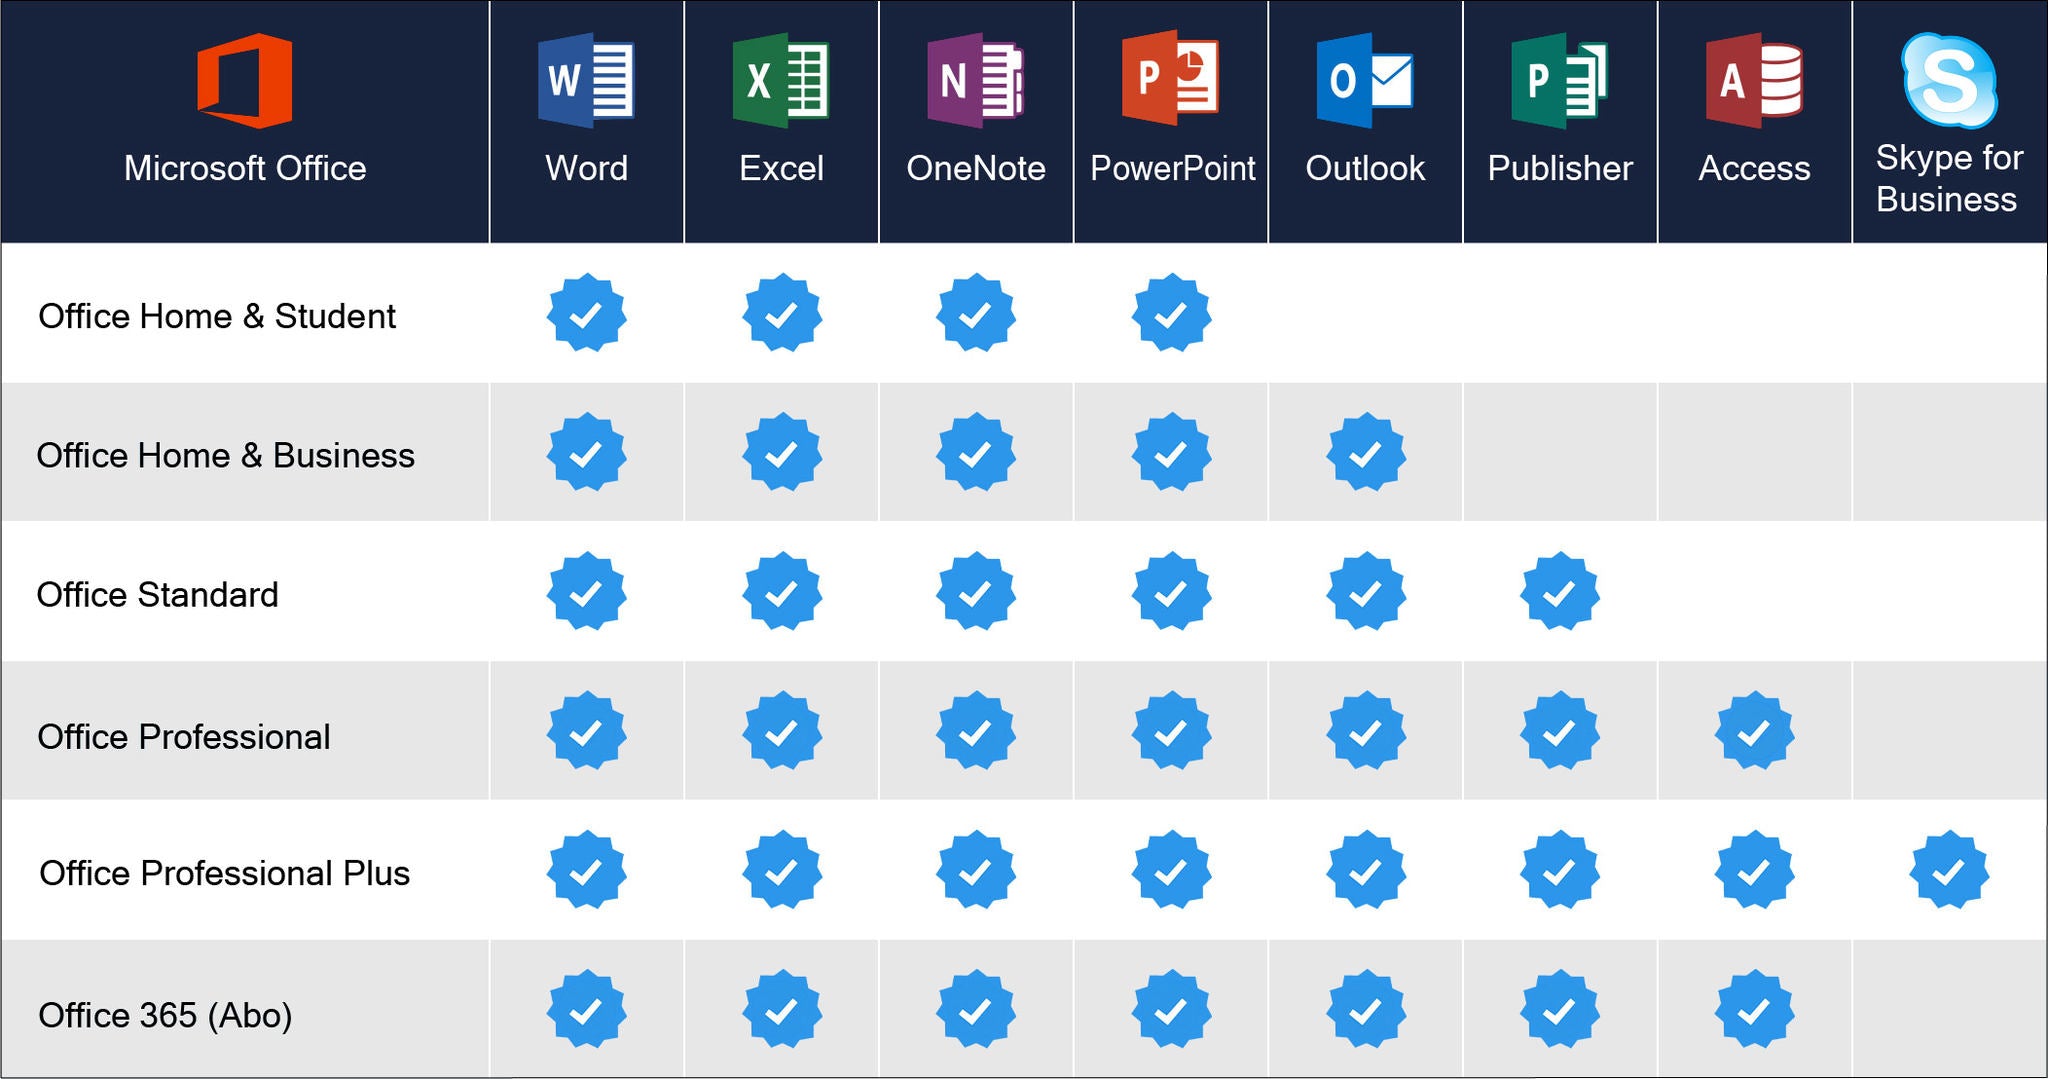 Microsoft Office 2013 Professional Plus | Windows